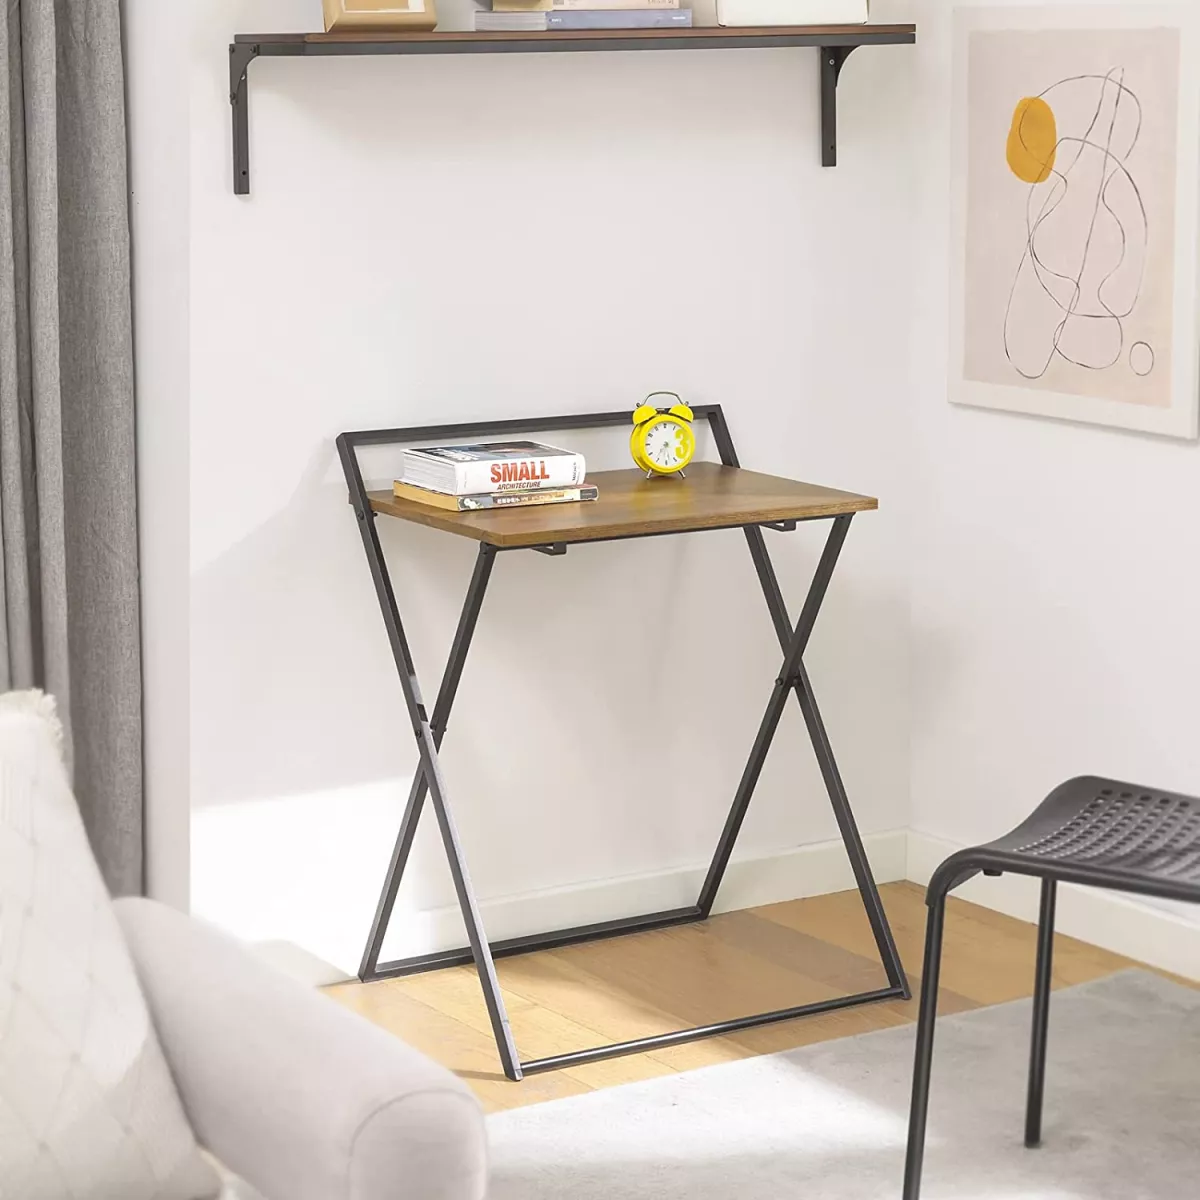 #2 - Smart foldebord / skrivebord til små rum, 63 x 45 x 77 cm, brun